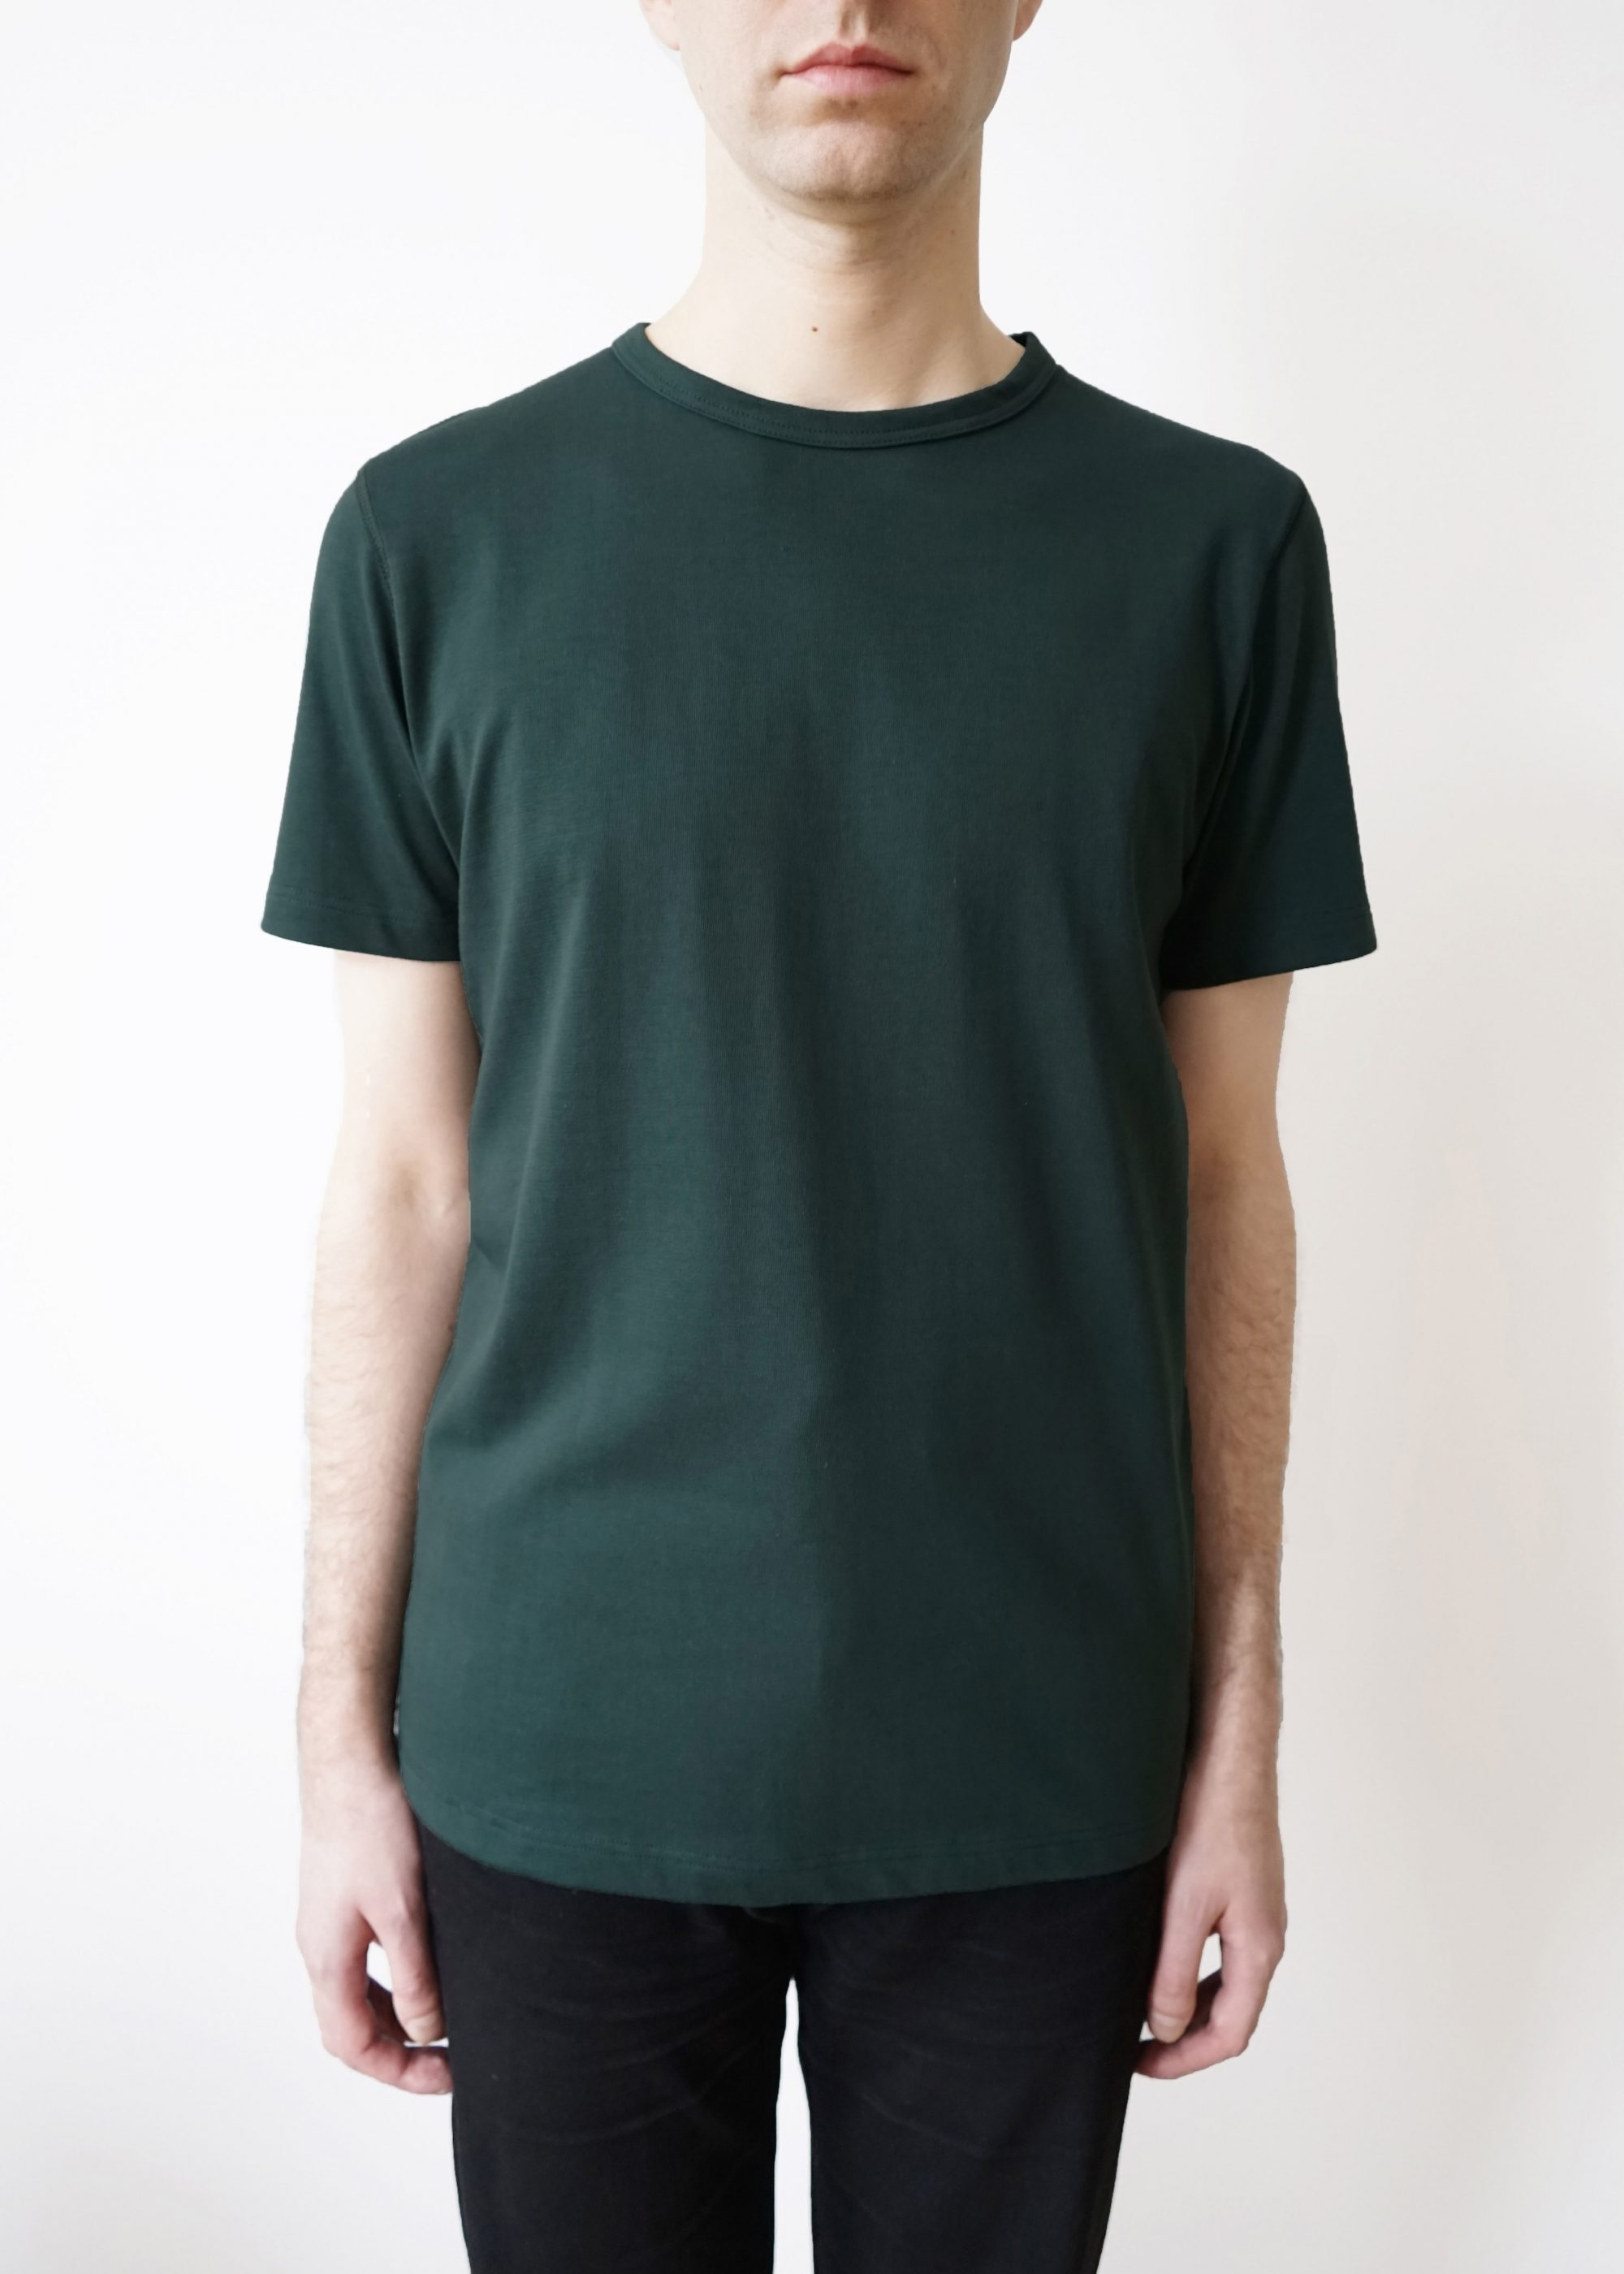 Product image for »Baum« Dark Green Ringer T-Shirt 100% Organic Cotton